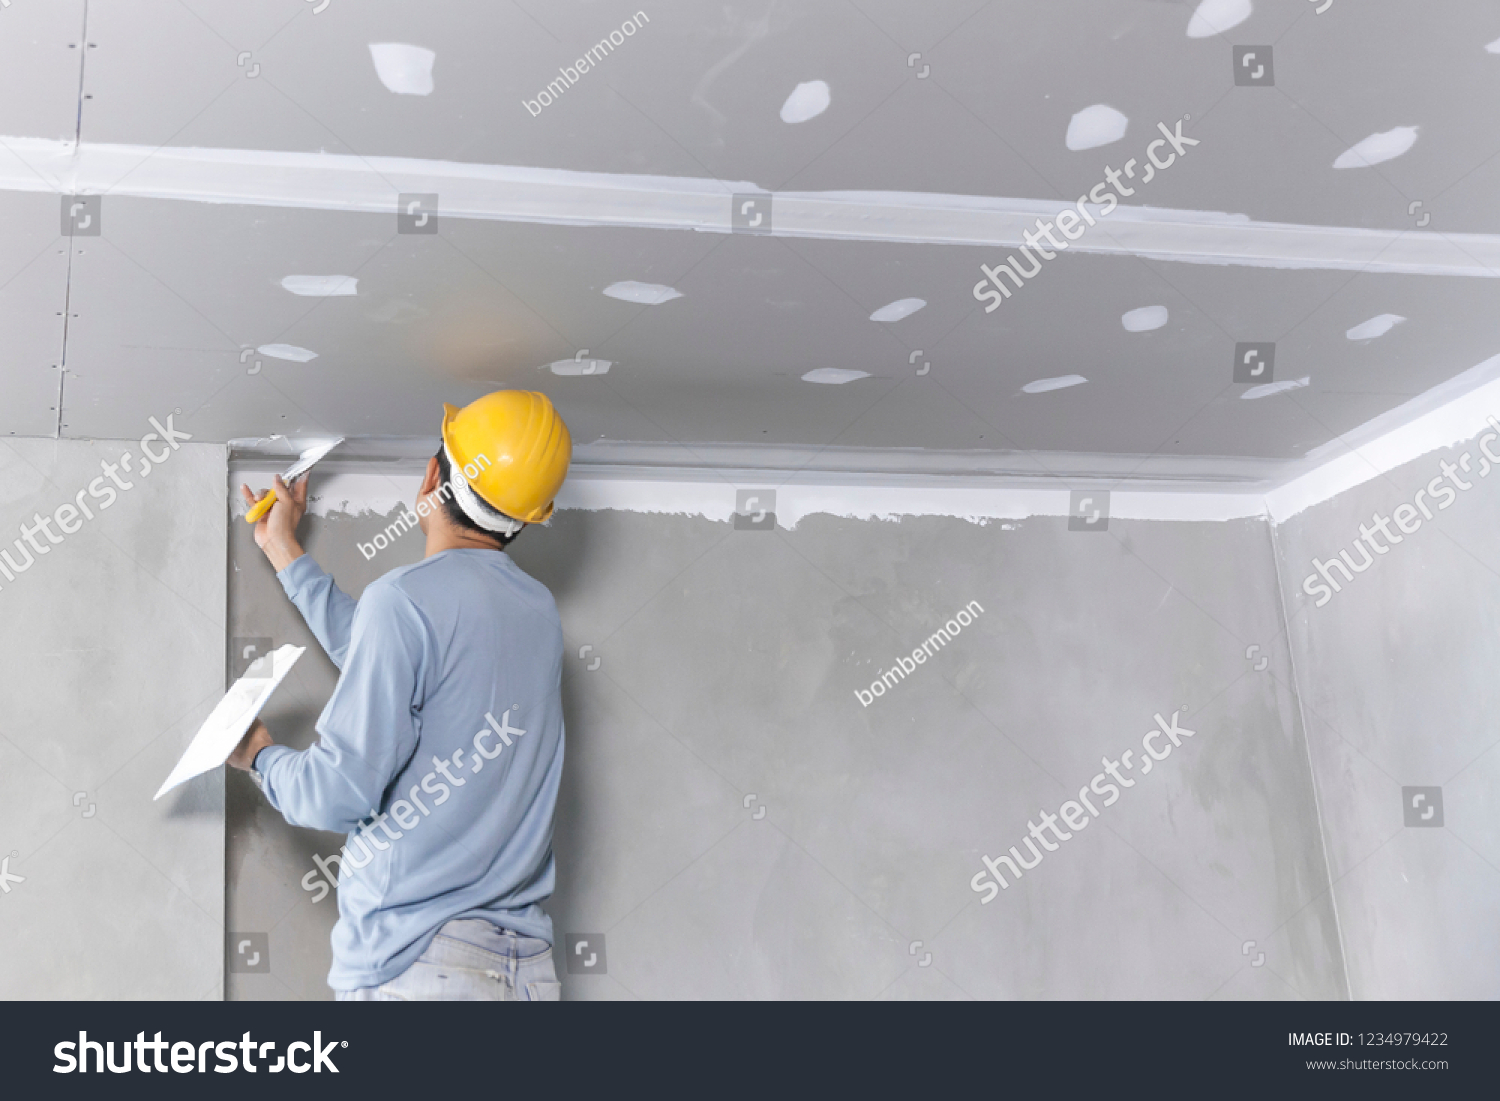 Craftsman working
with plaster gypsum ceiling for interior build gypsum board ceiling #1234979422